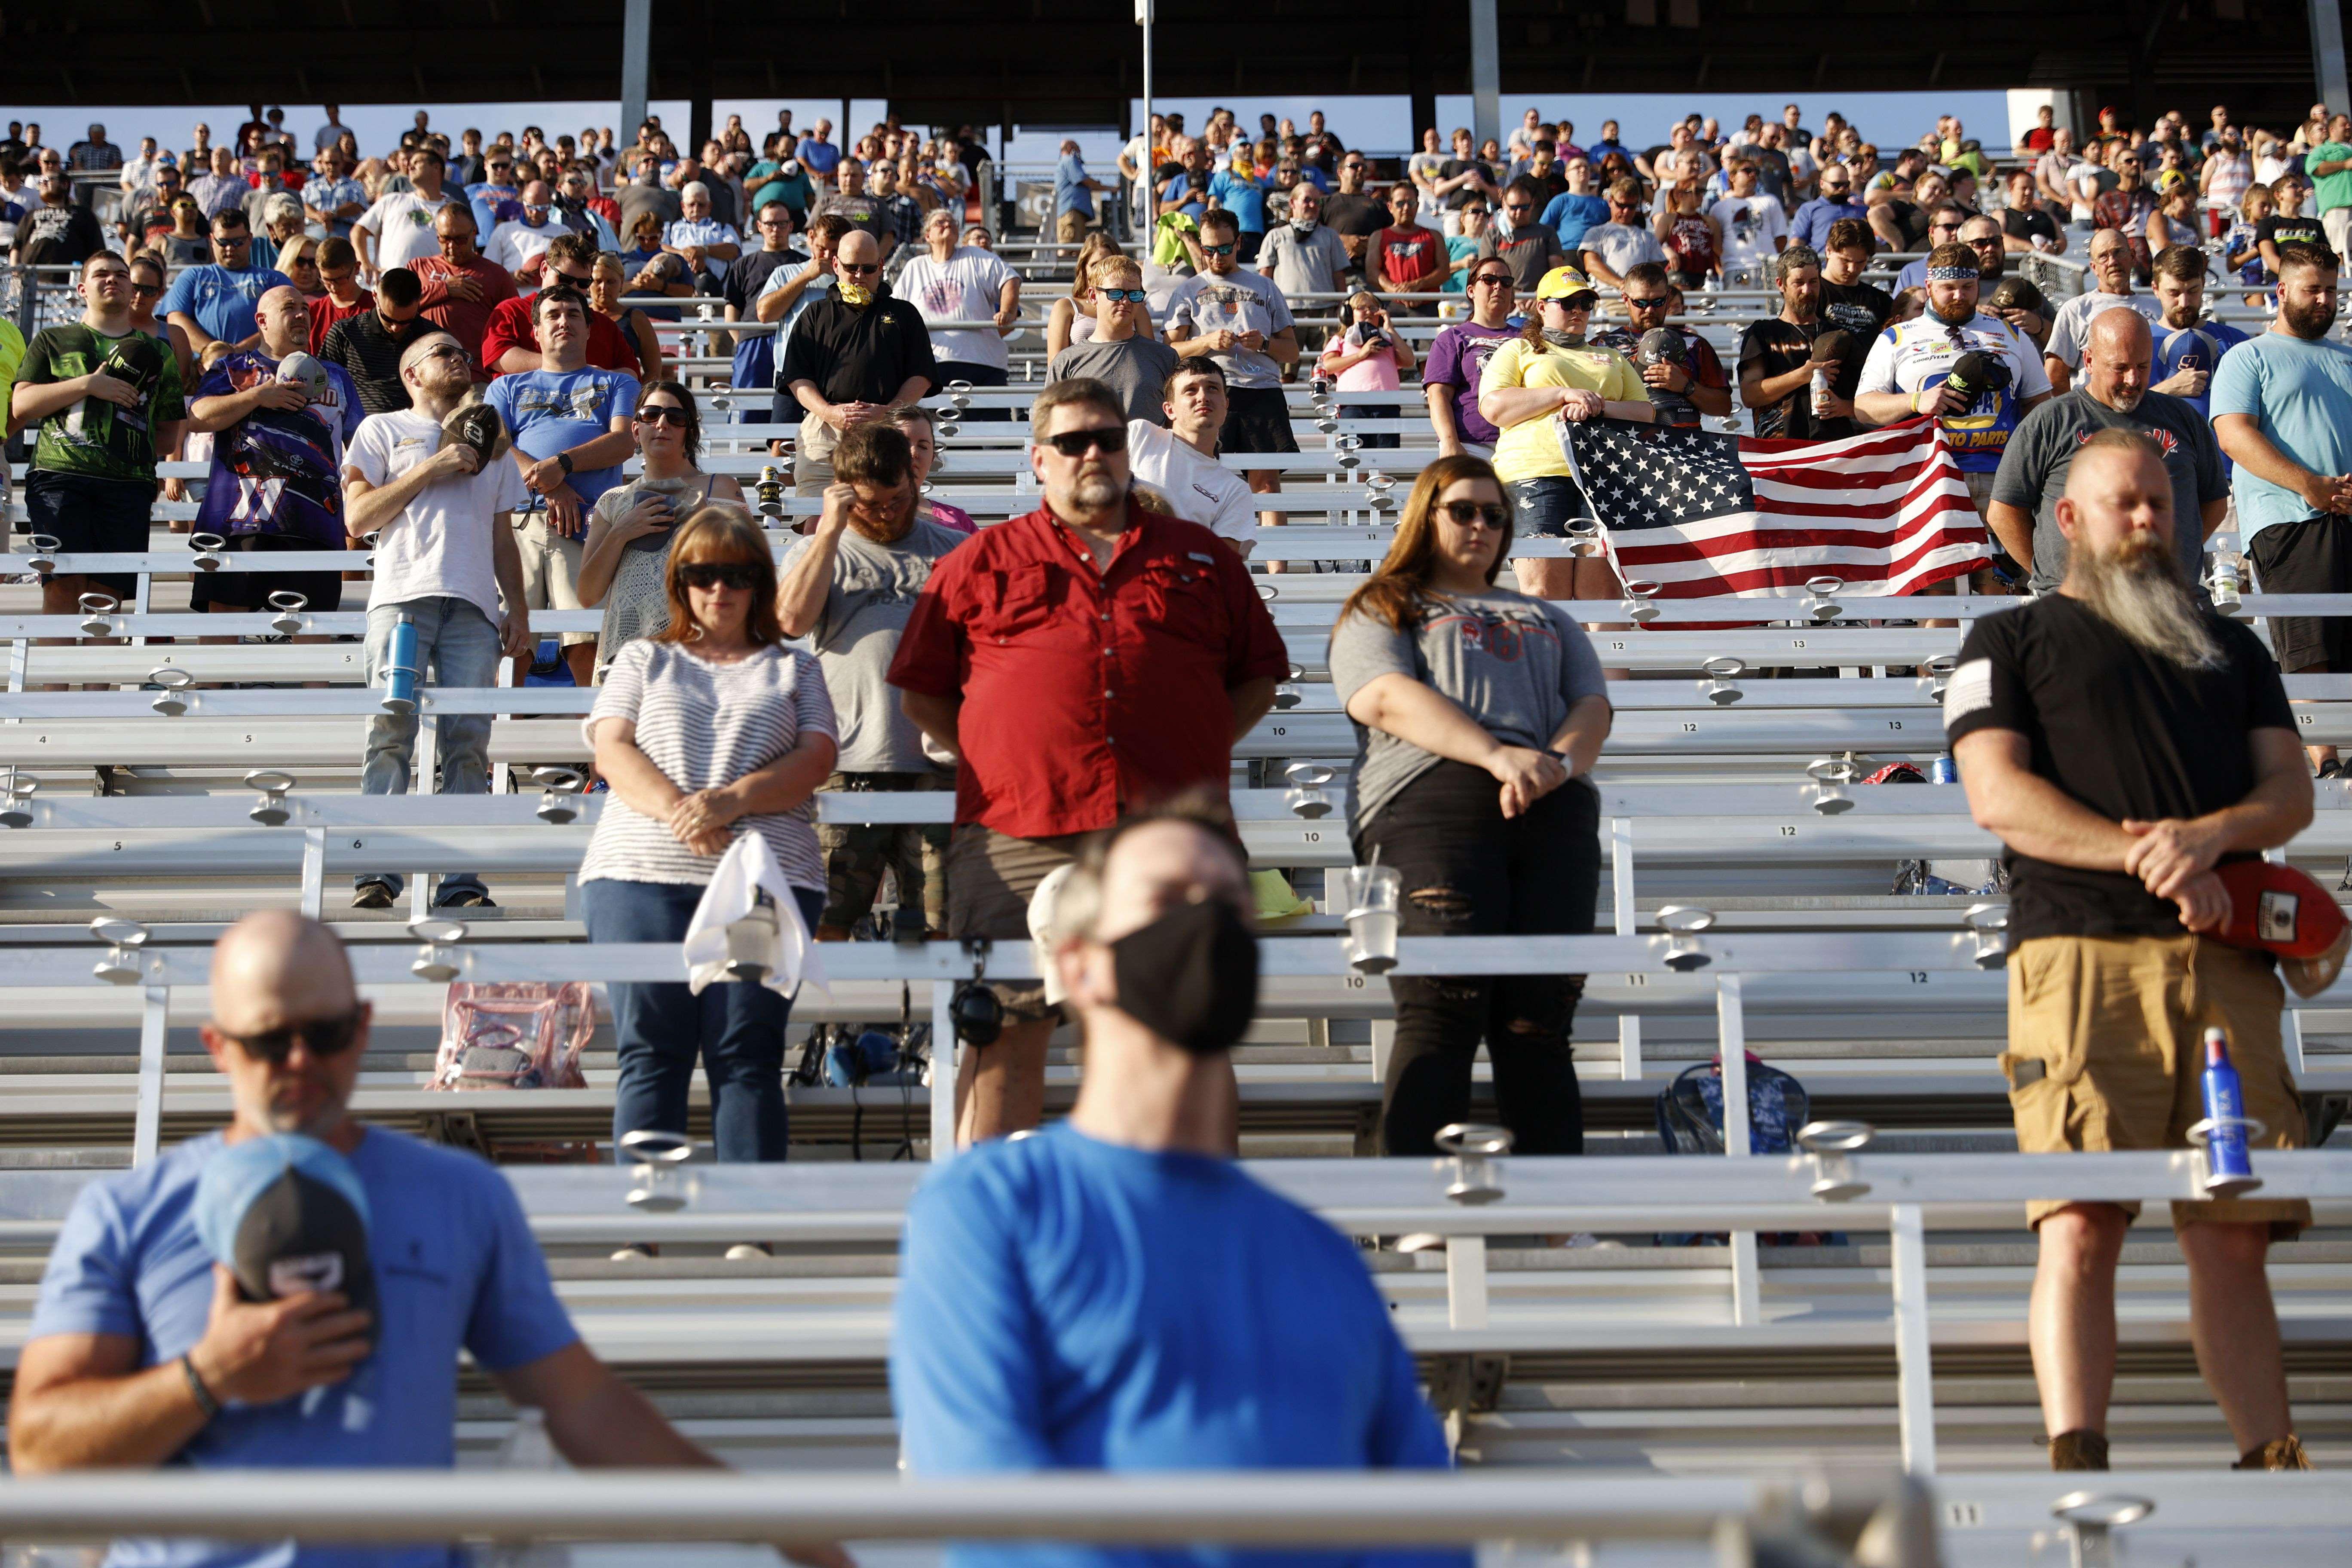 Trotz Corona: 20.000 Zuschauer bei Nascar-Rennen in den USA